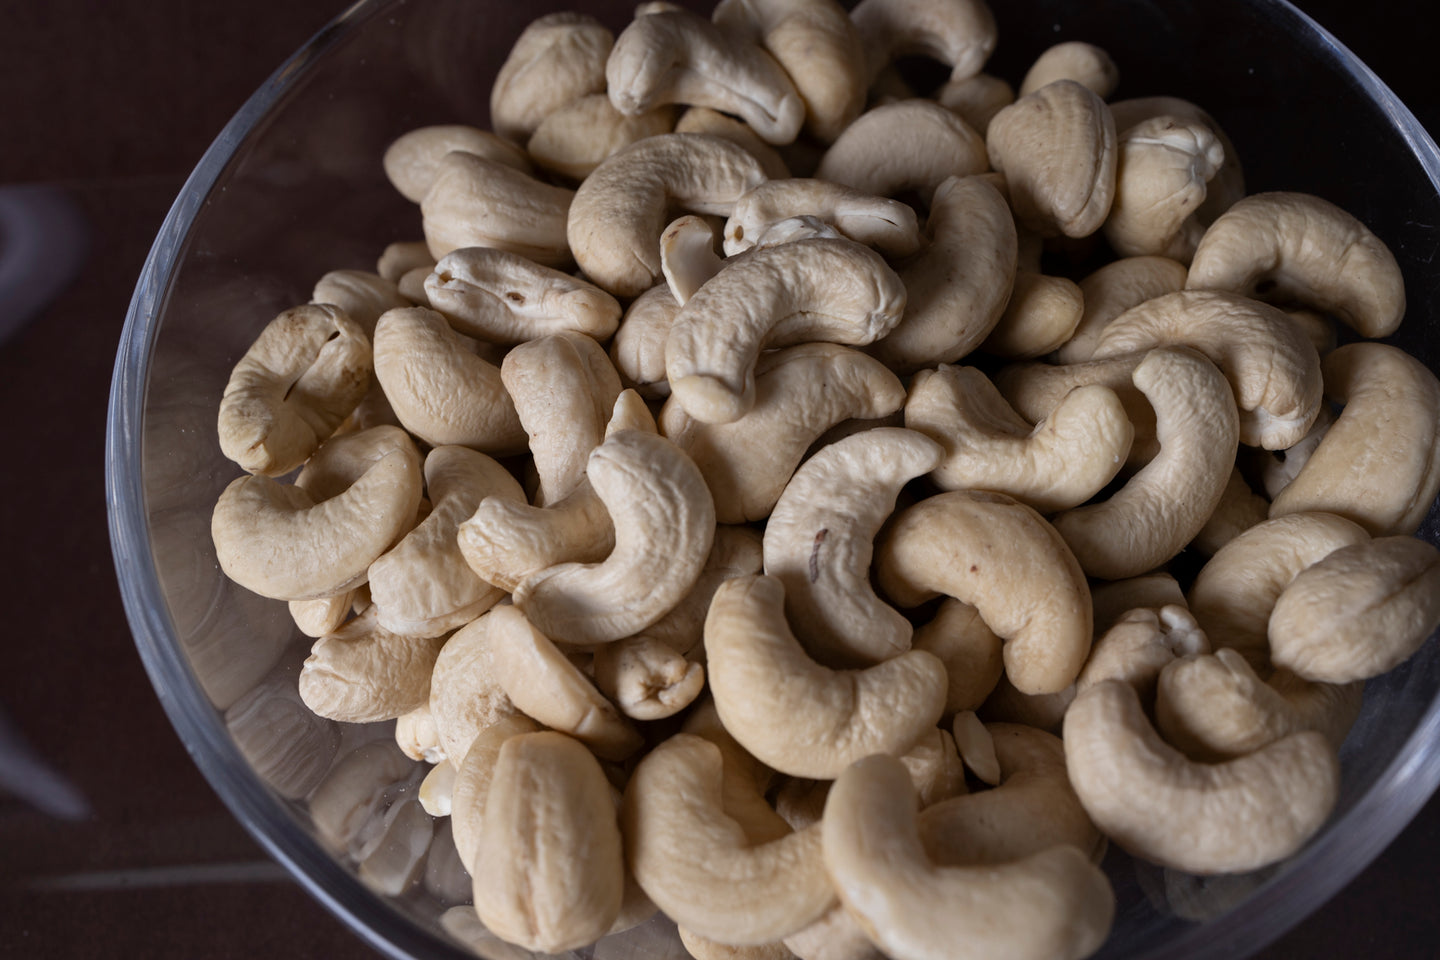 SilverMokka Premium Cashew/ Kaju - W280 Grade | Whole Cashews | 100% Natural | Dry Fruits, Nuts | Great Taste, Crunchy and Buttery Flavour | Farm to Fork | Zip-lock Bag |